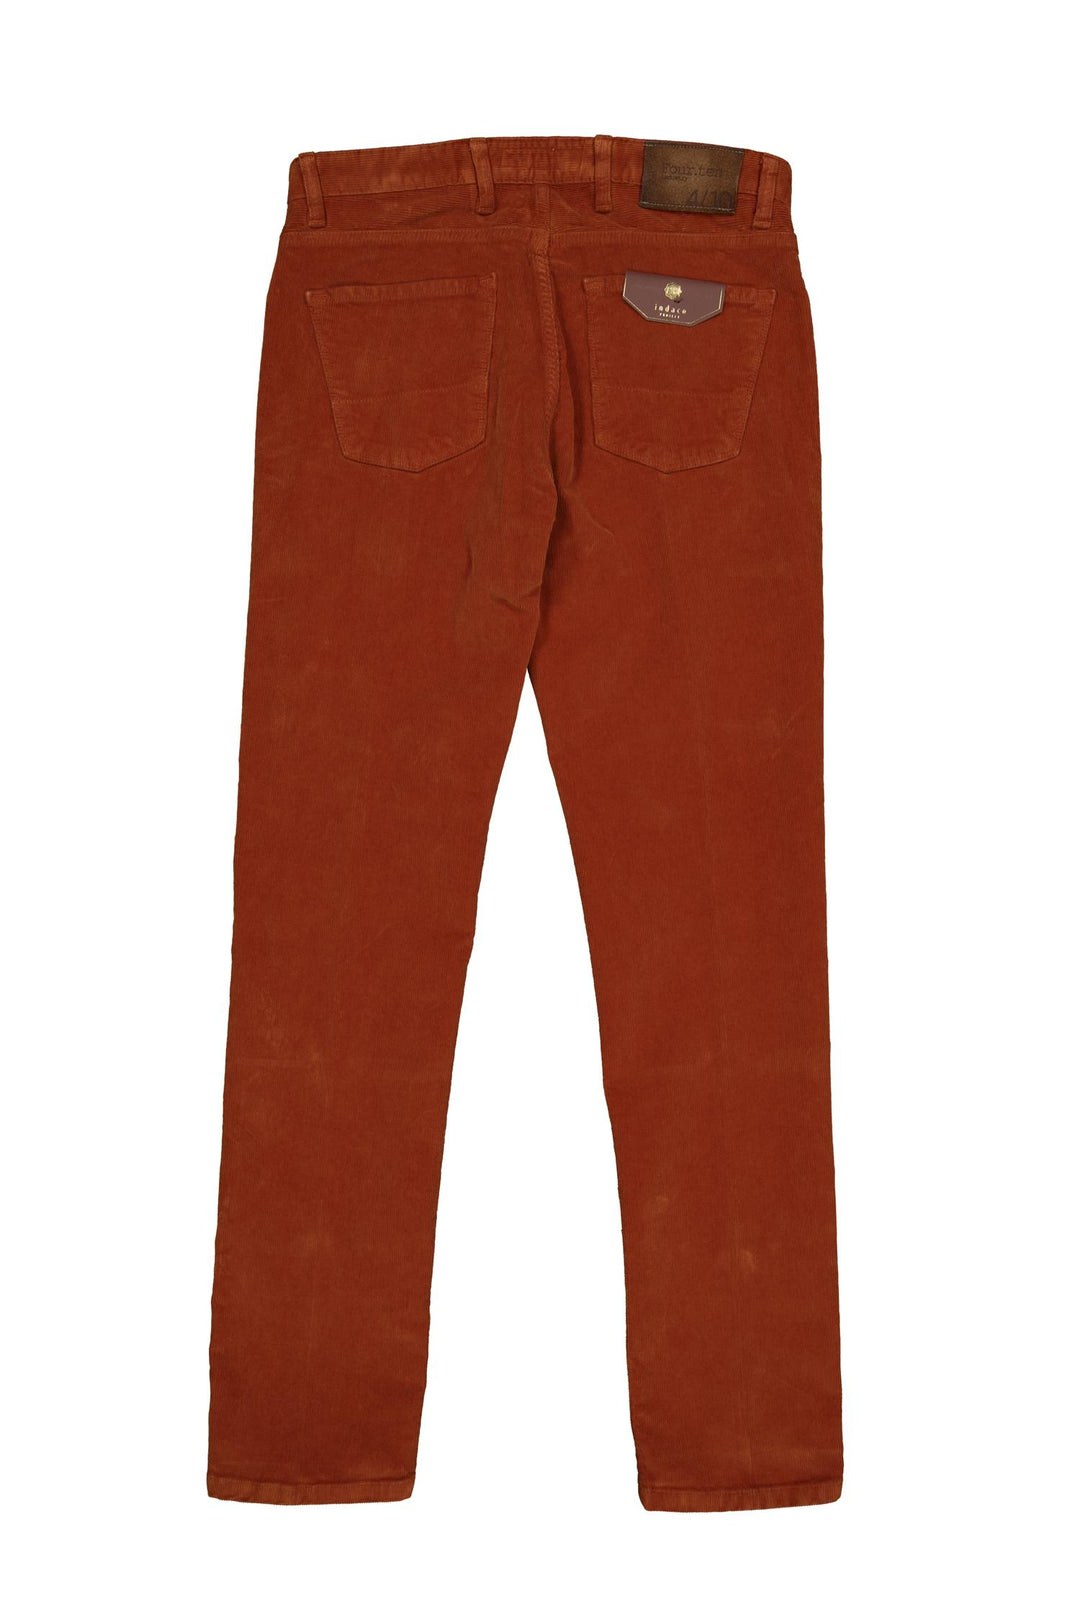 FourTen Cordury Trouser Orange-Bukser-Bogartstore